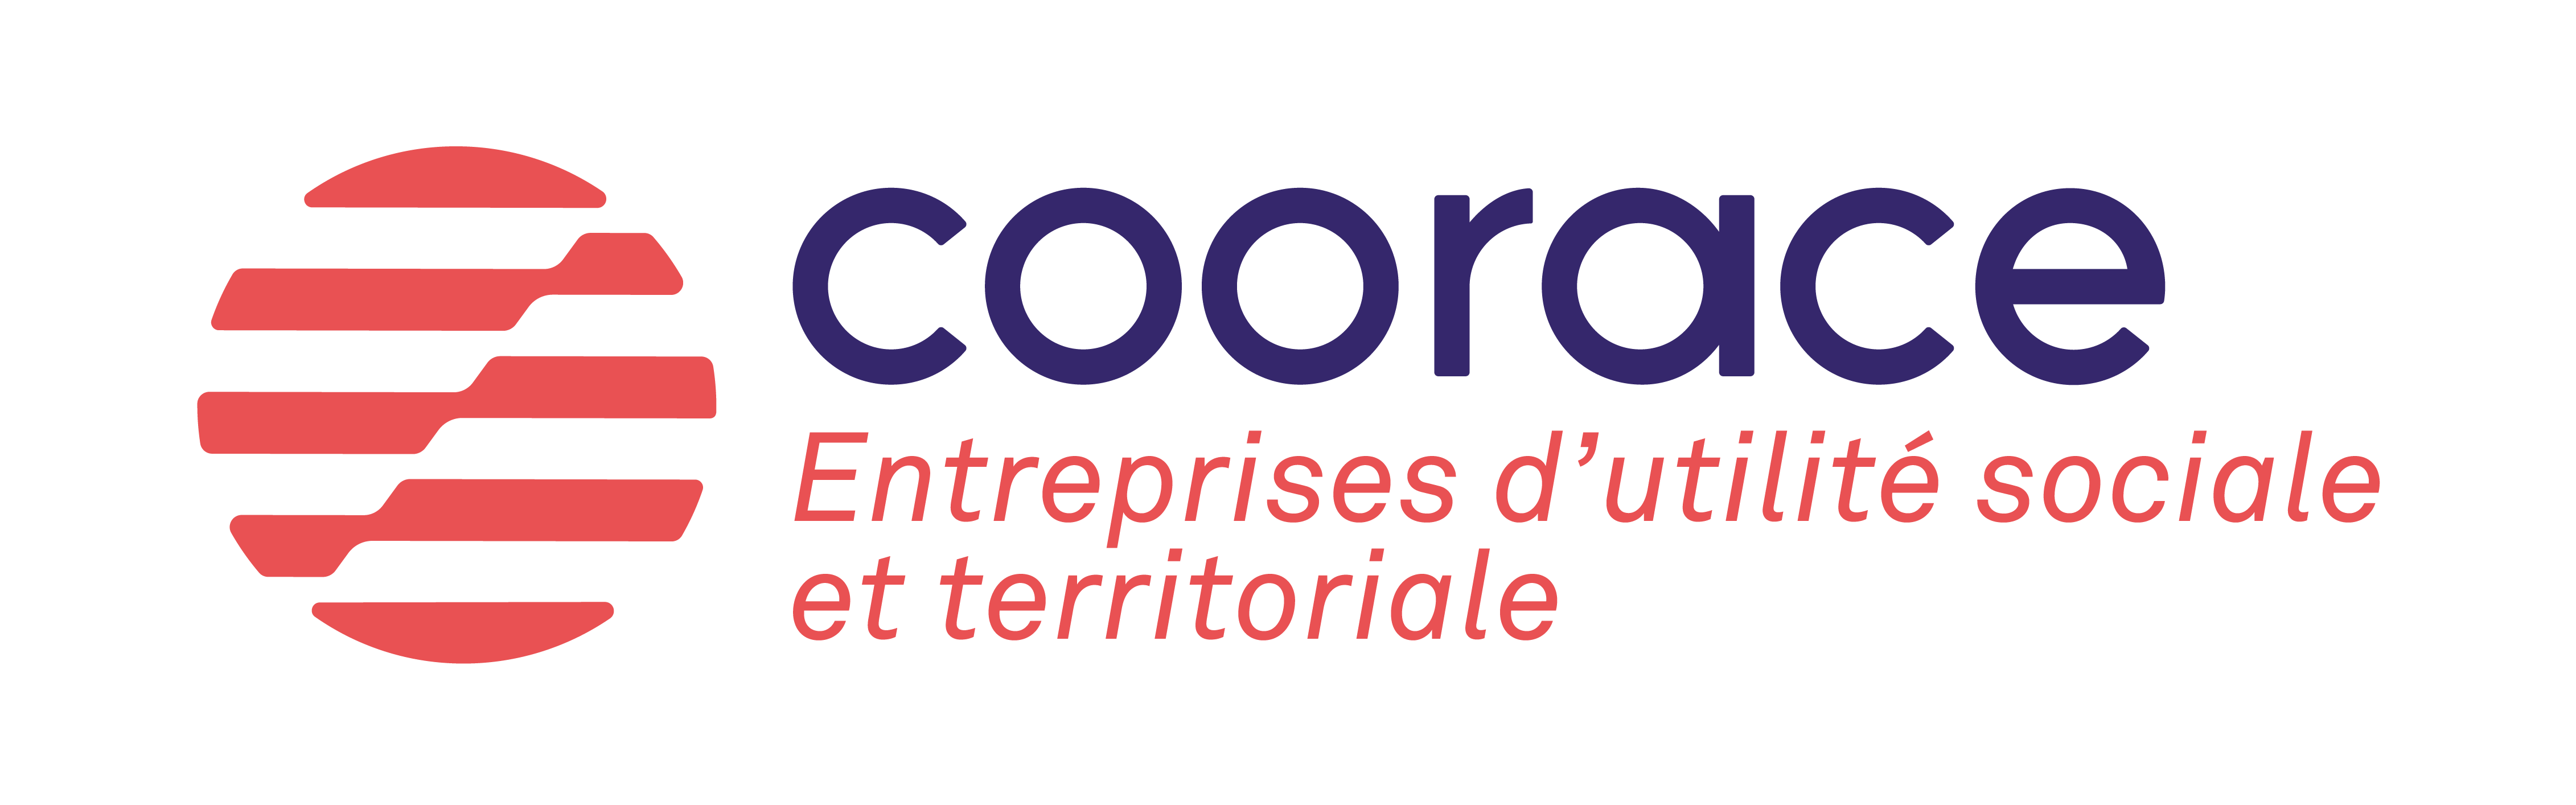 Logo de Coorace